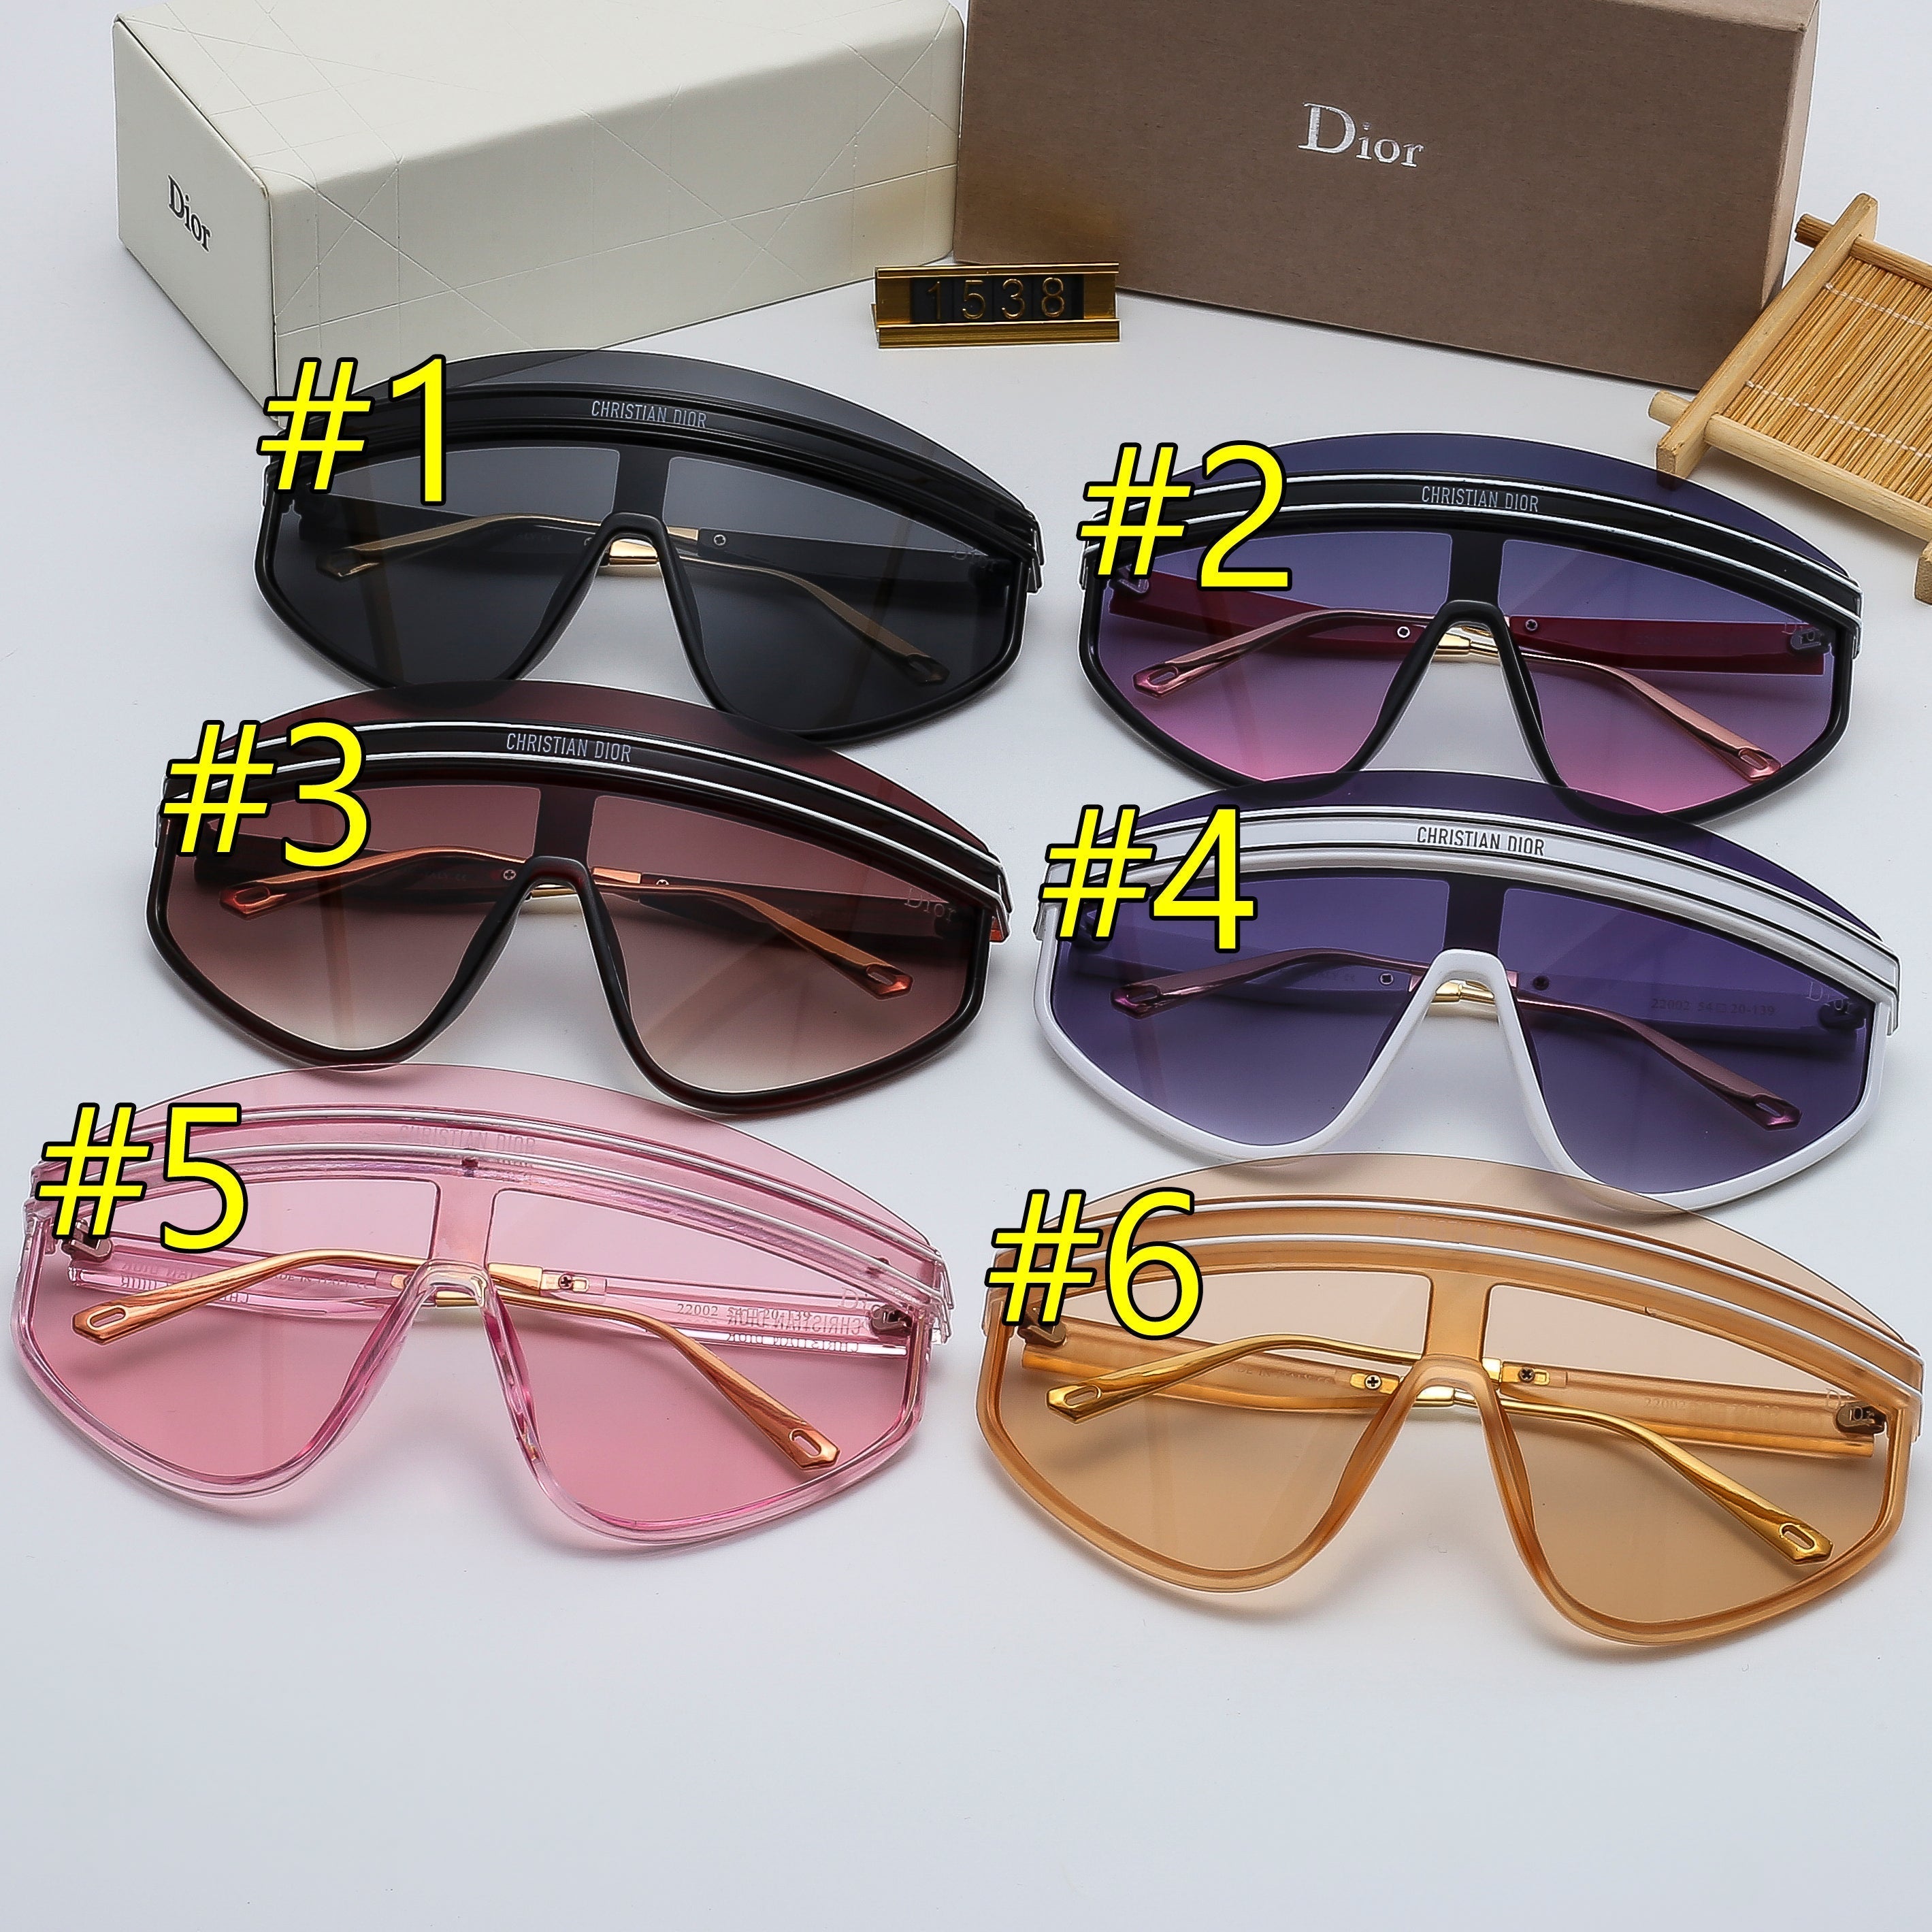 Christian Dior letter logo couples sunglasses beach sunglasses